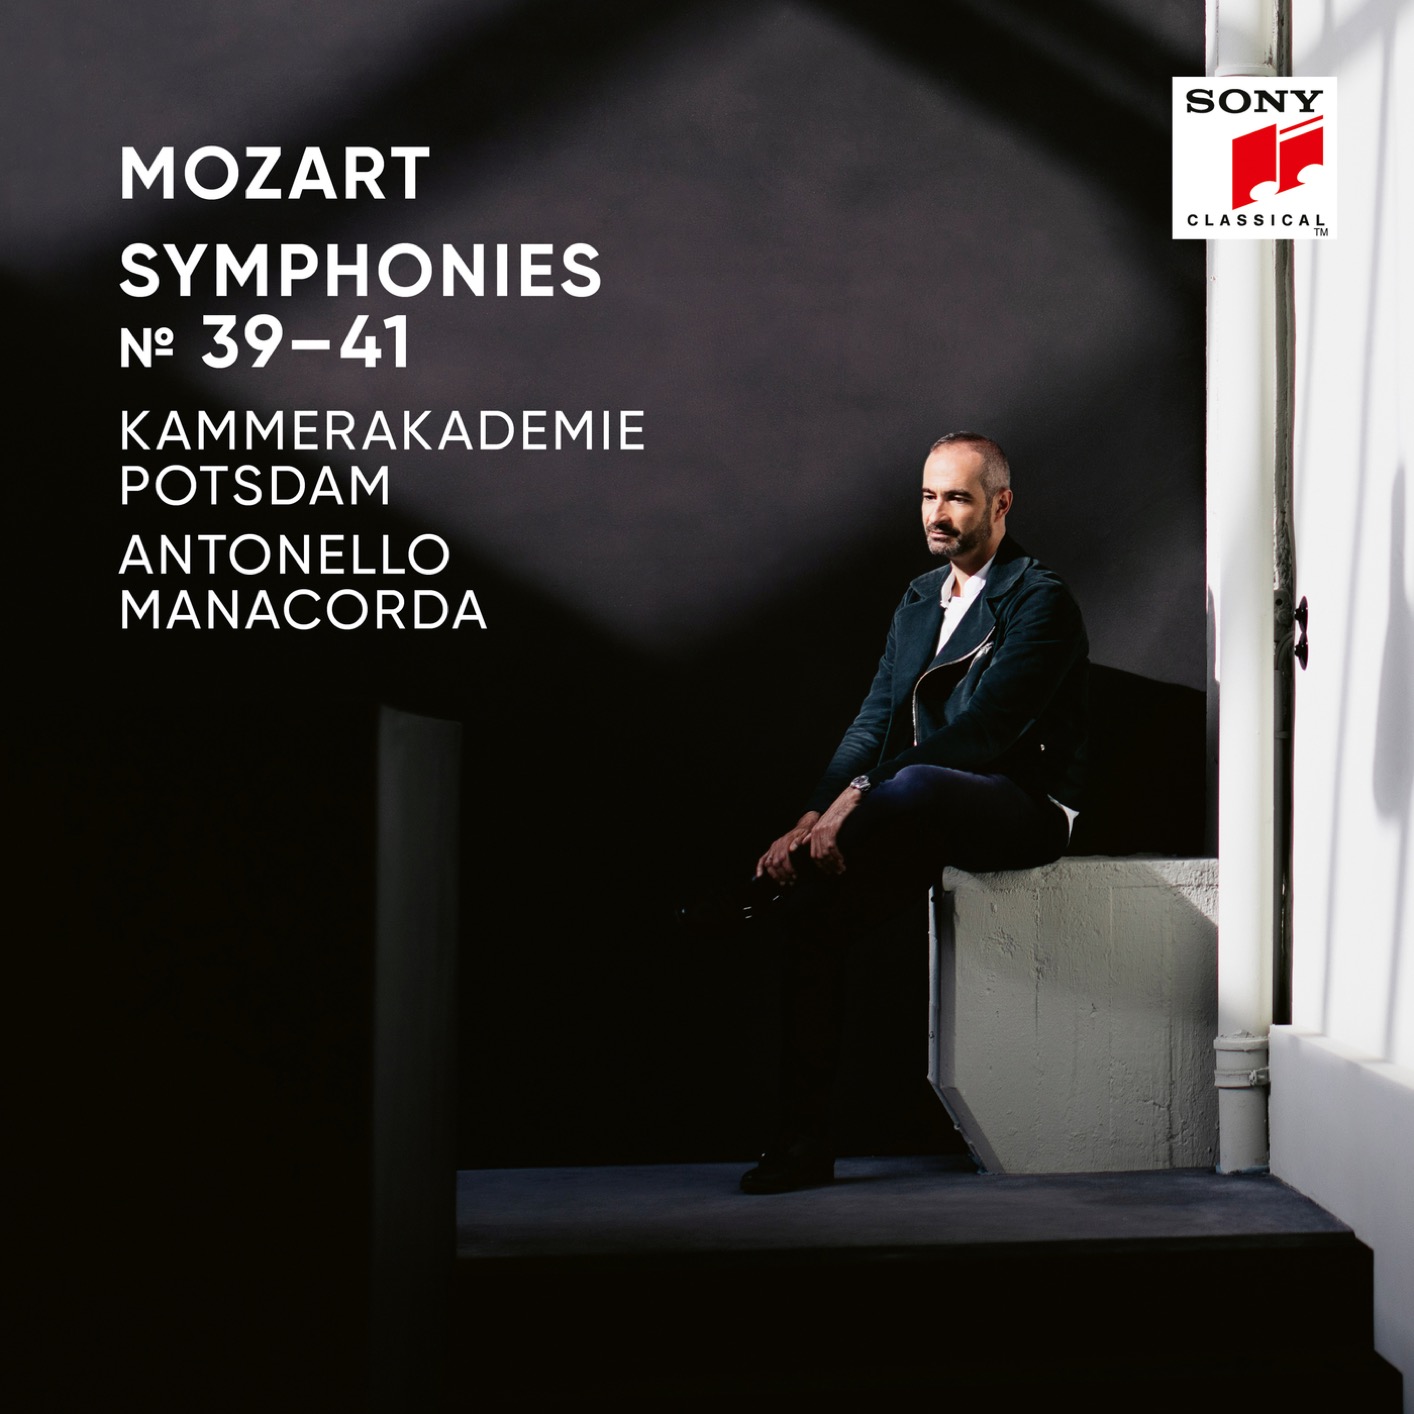 Kammerakademie Potsdam & Antonello Manacorda - Mozart Symphonies Nos. 39, 40, 41 (2021) [FLAC 24bit/96kHz]